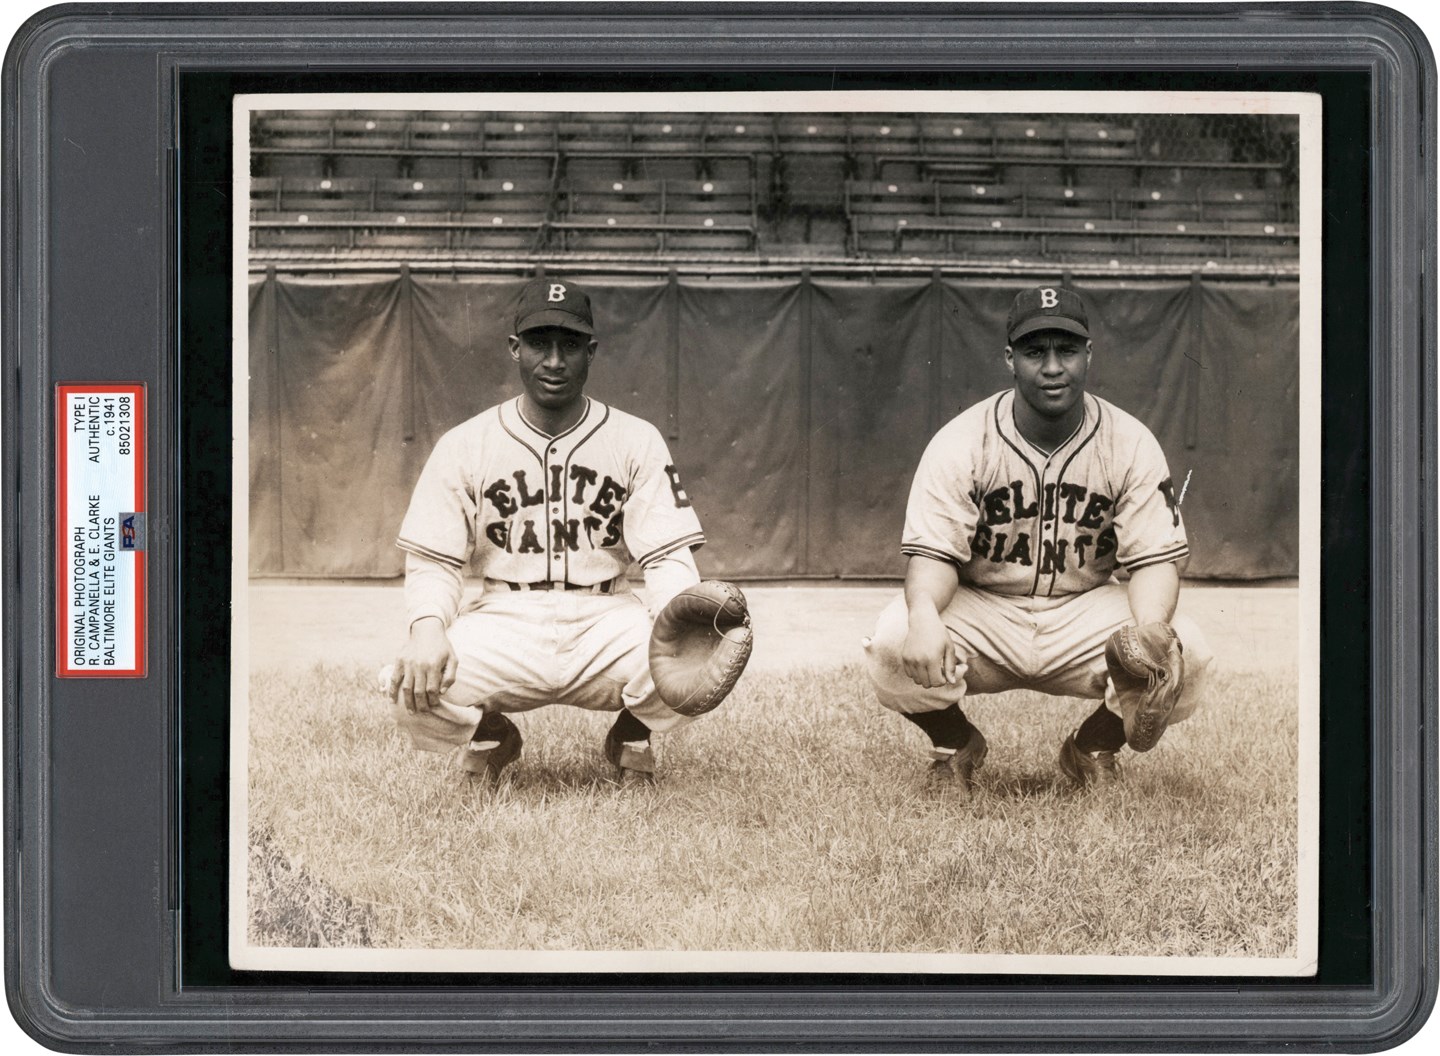 - 1941 Roy Campanella Baltimore Elite Giants Photograph (PSA Type I)